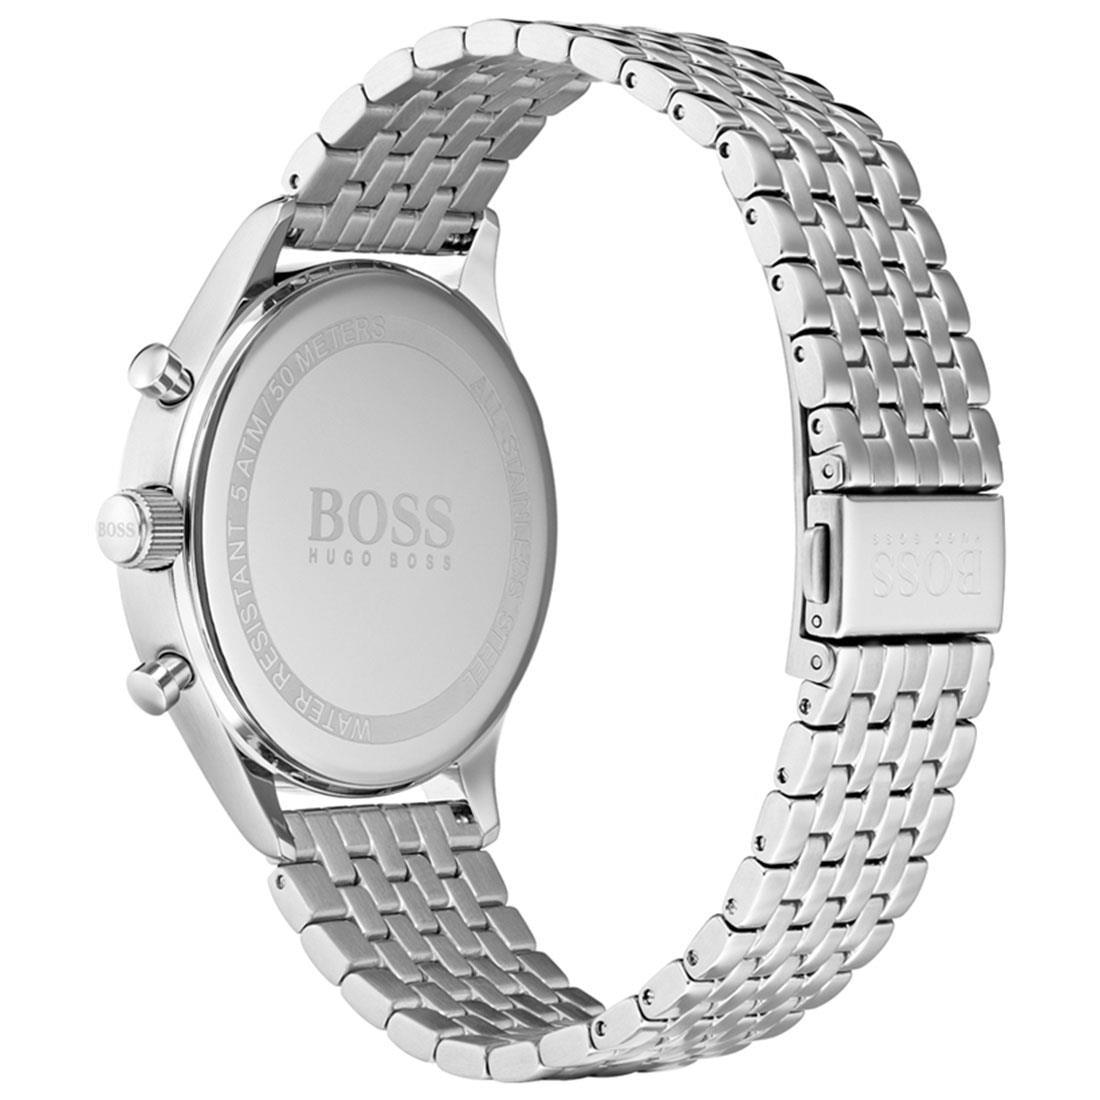 Hugo Boss 1513653 Men's Watch - Watch Home™